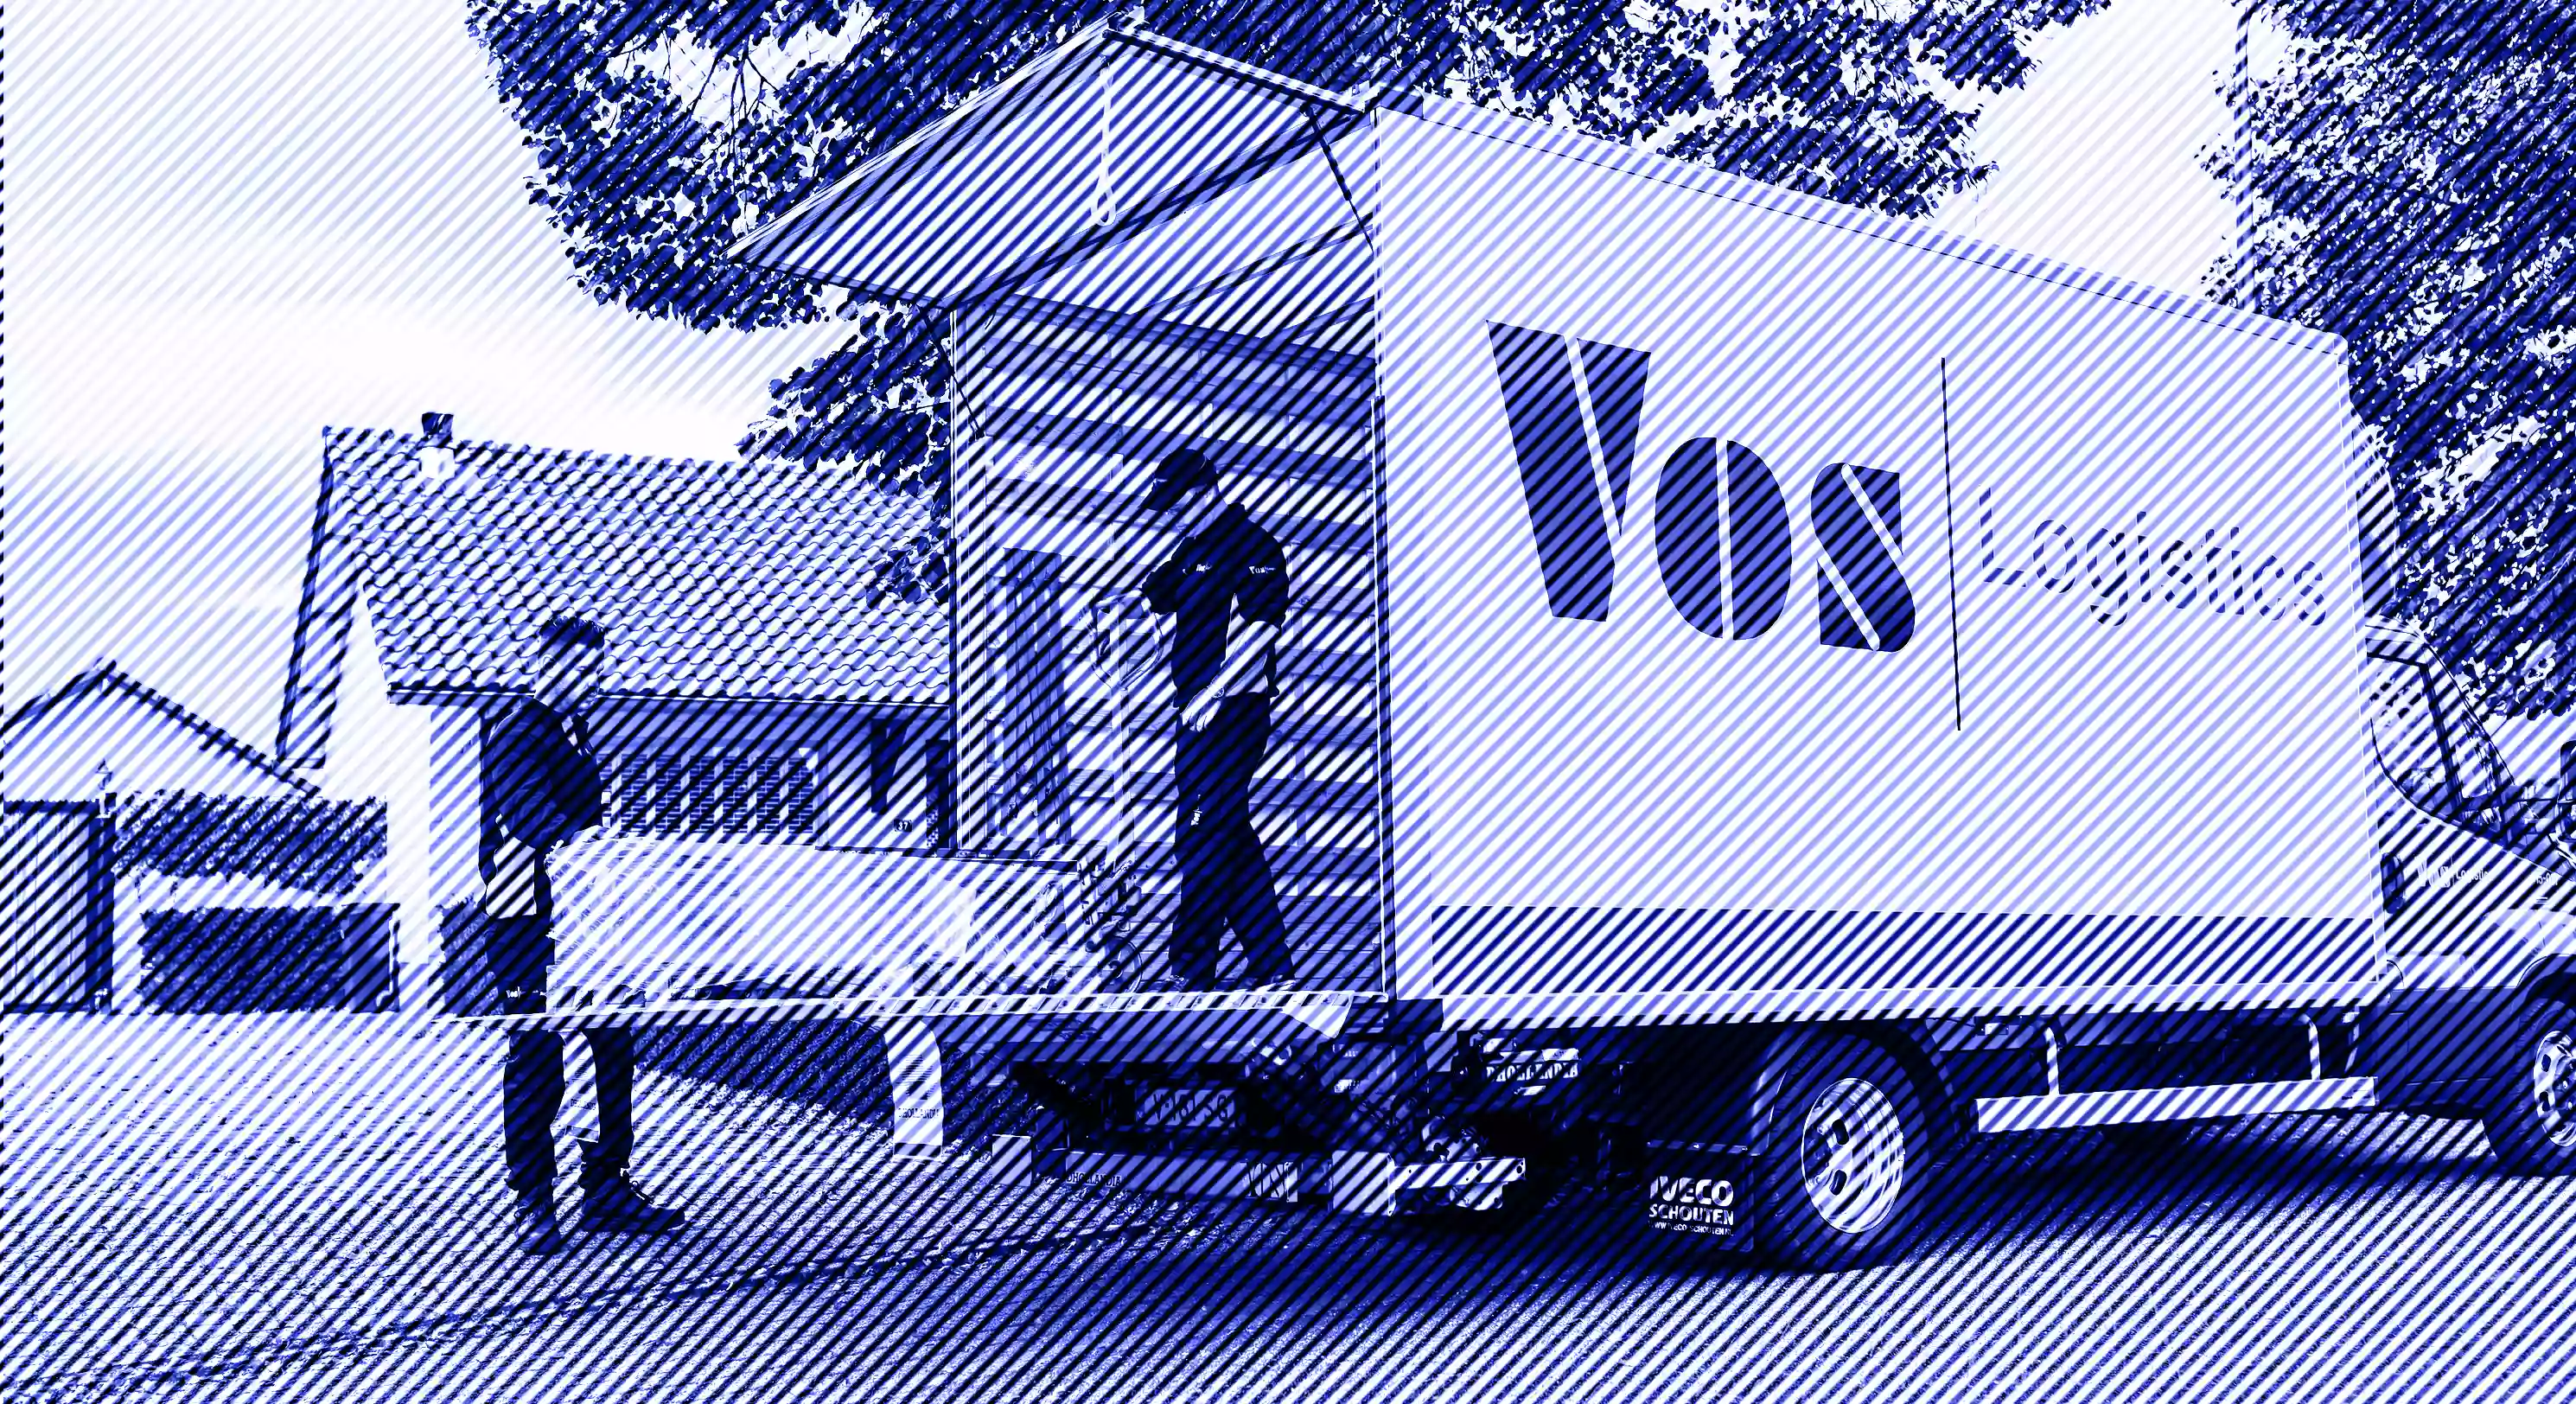 Fallstudie Vos Logistics Performance Monitor